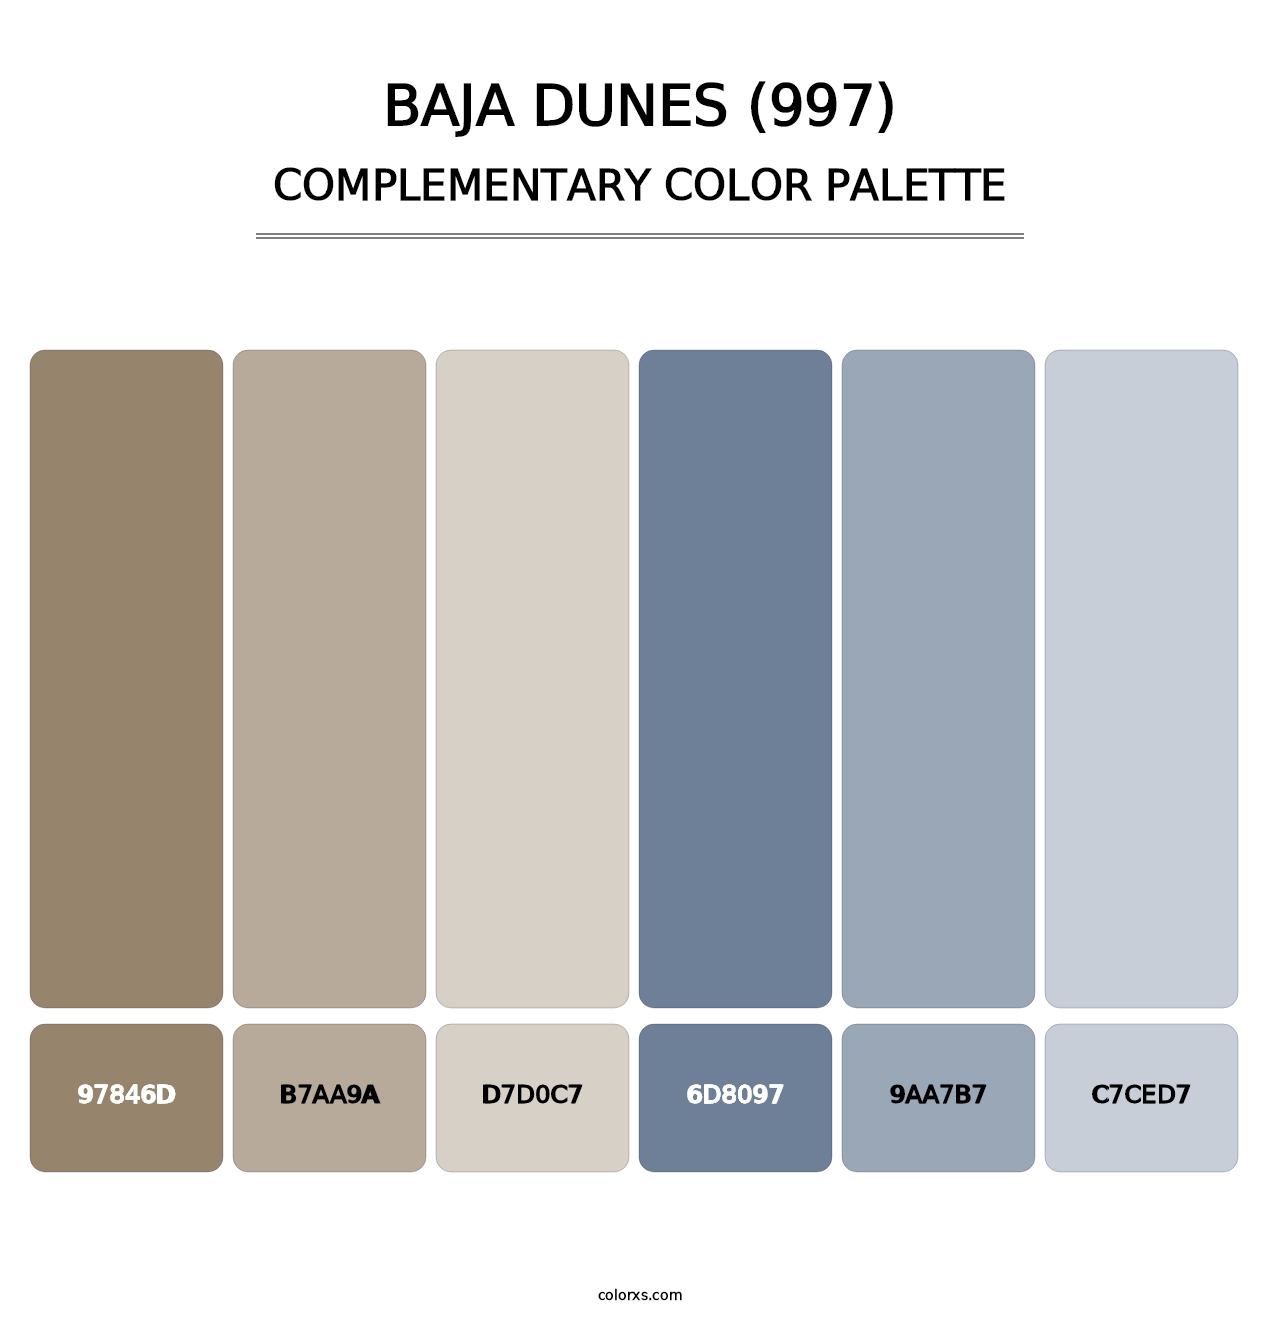 Baja Dunes (997) - Complementary Color Palette